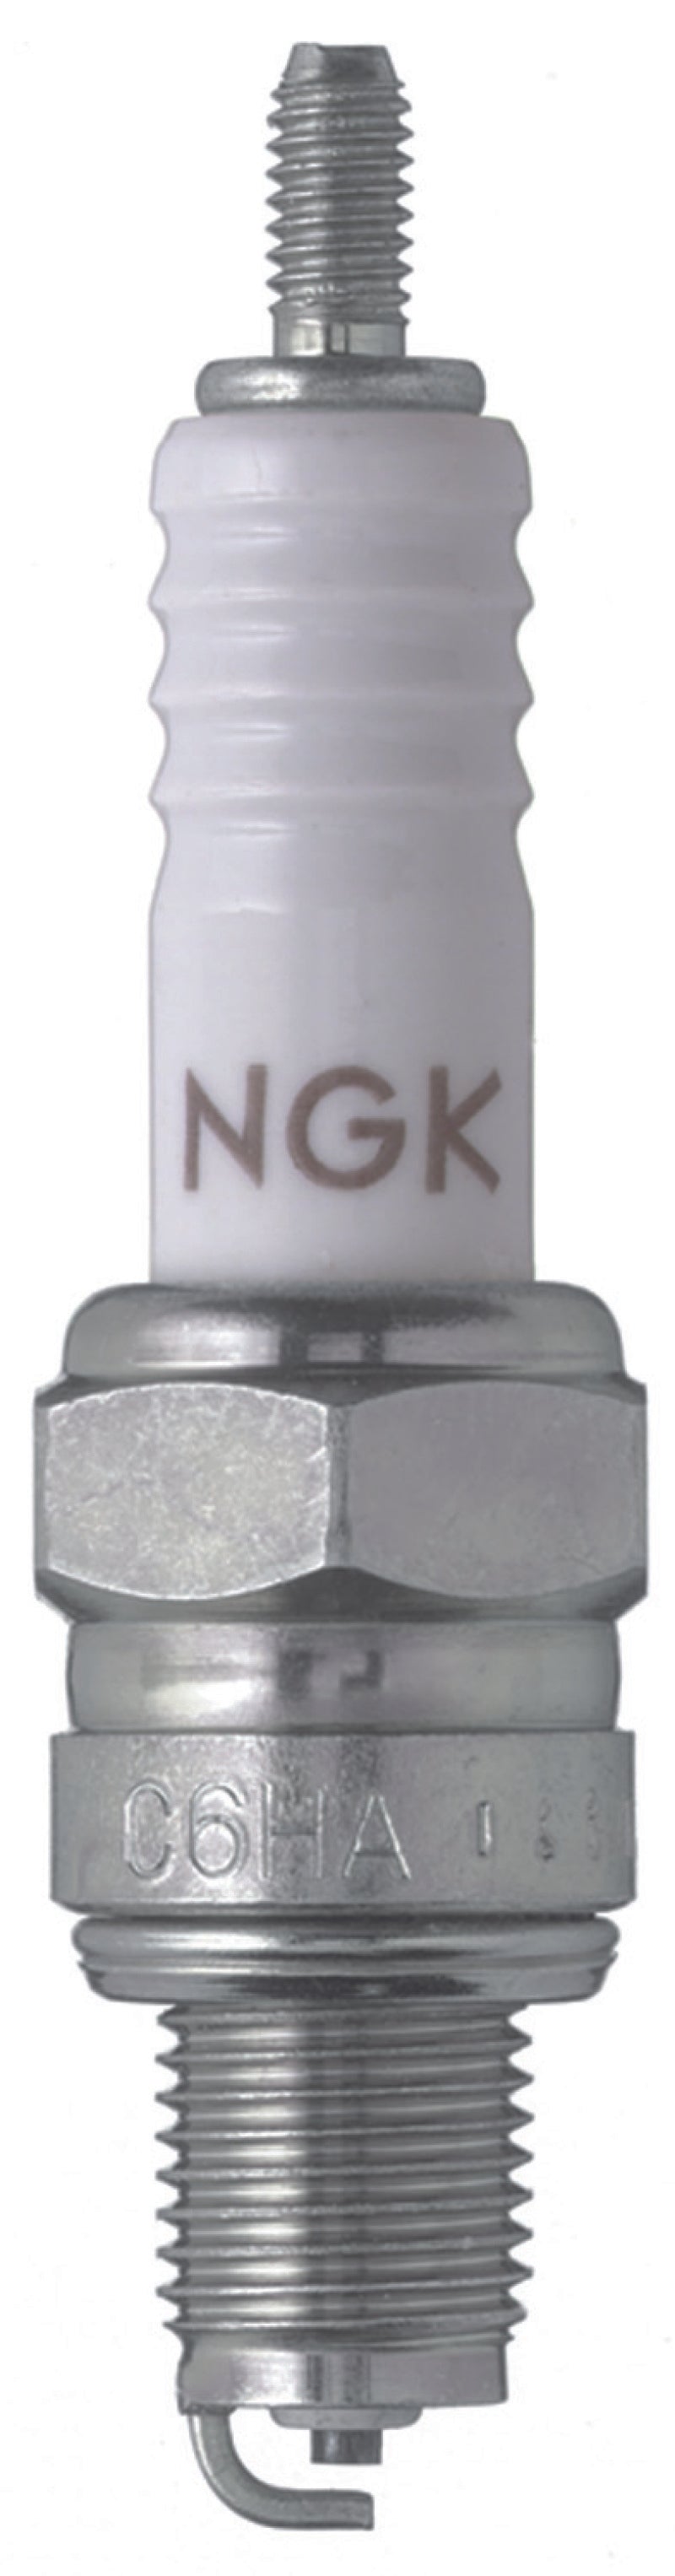 NGK Standard Spark Plug Box of 10 (C8HA) -  Shop now at Performance Car Parts